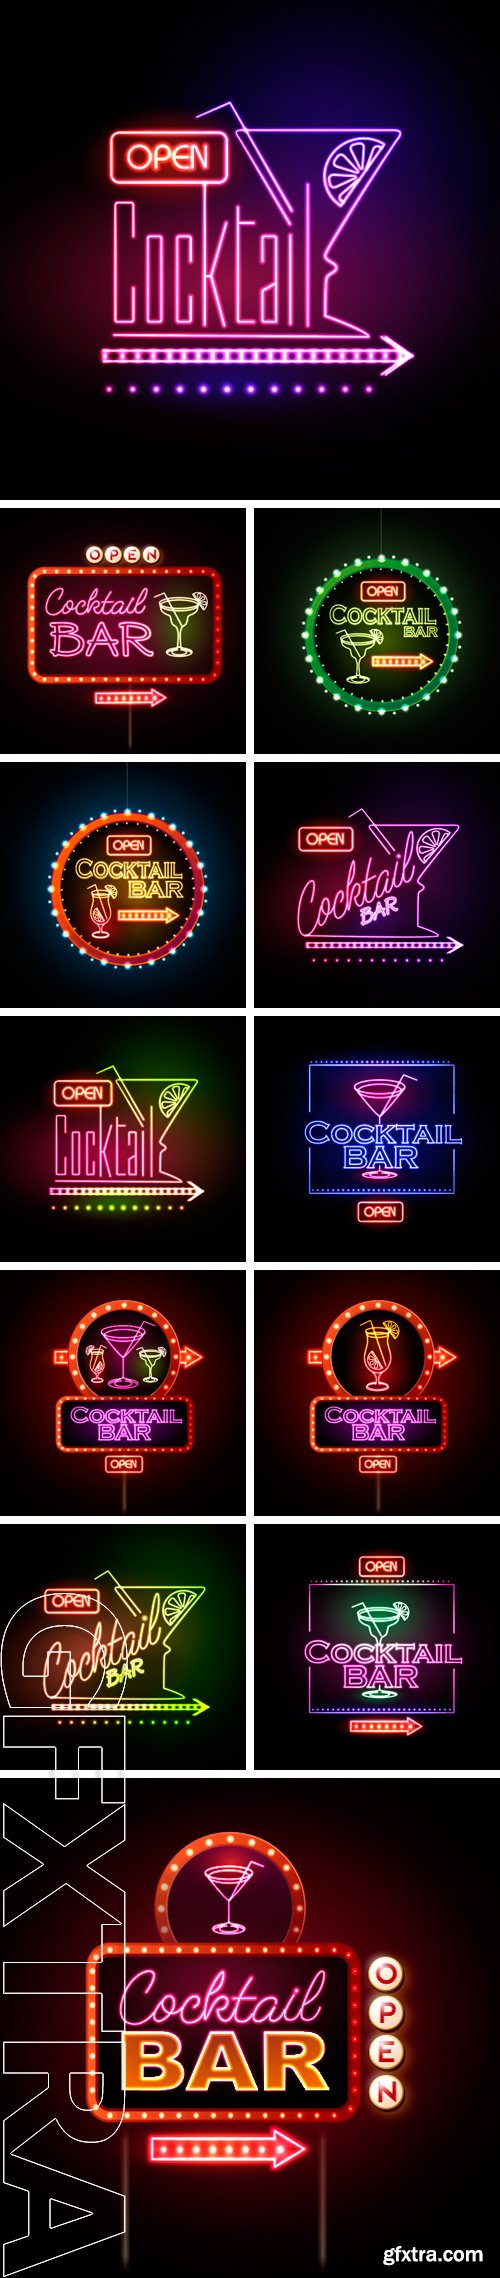 Stock Vectors - Neon sign Cocktail bar